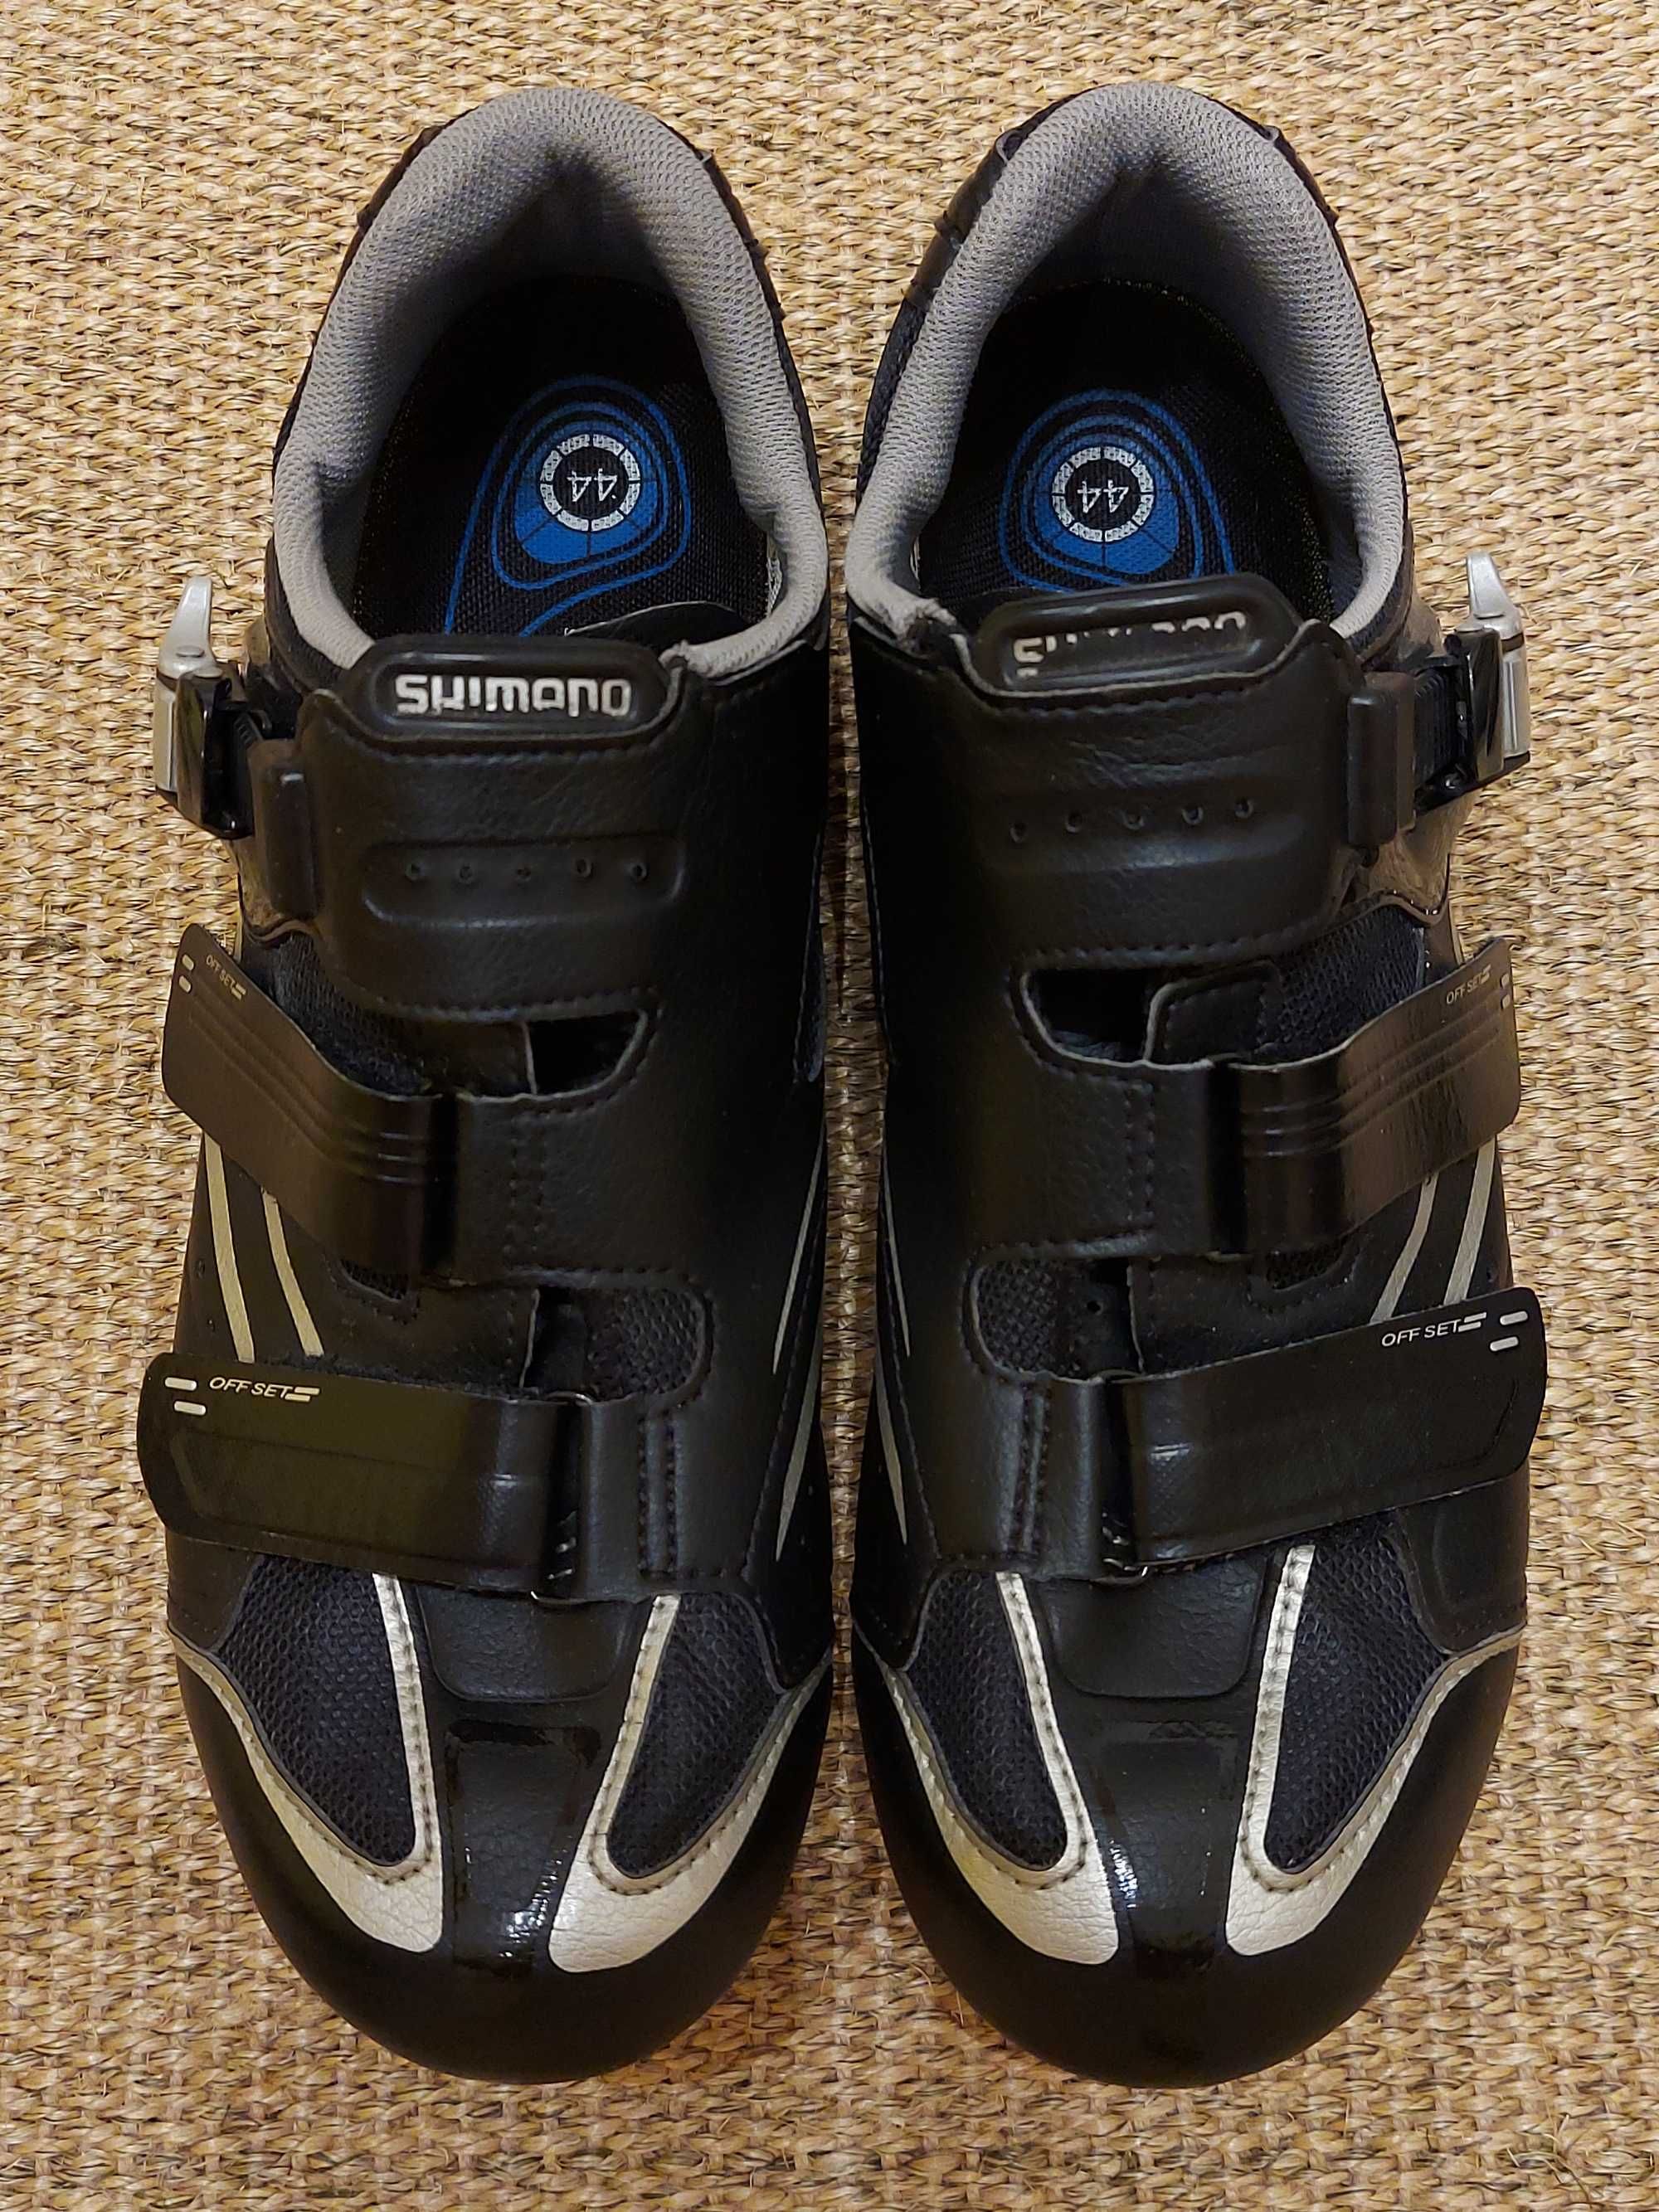 Sapatos Shimano R088 - 44